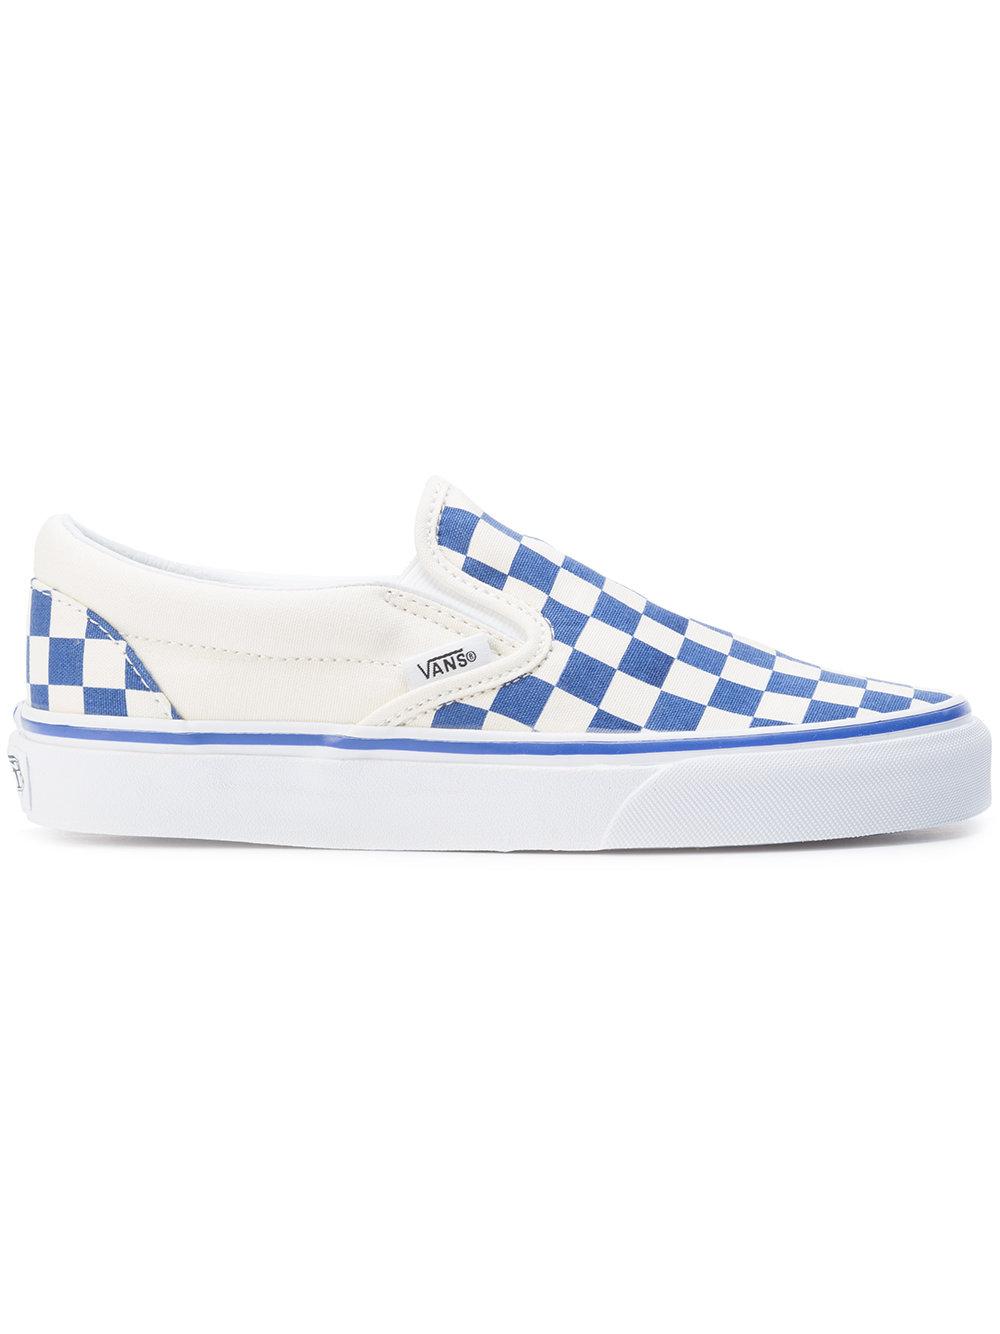 Vans Cotton Checkered Slip On Sneakers in Blue for Men - Lyst